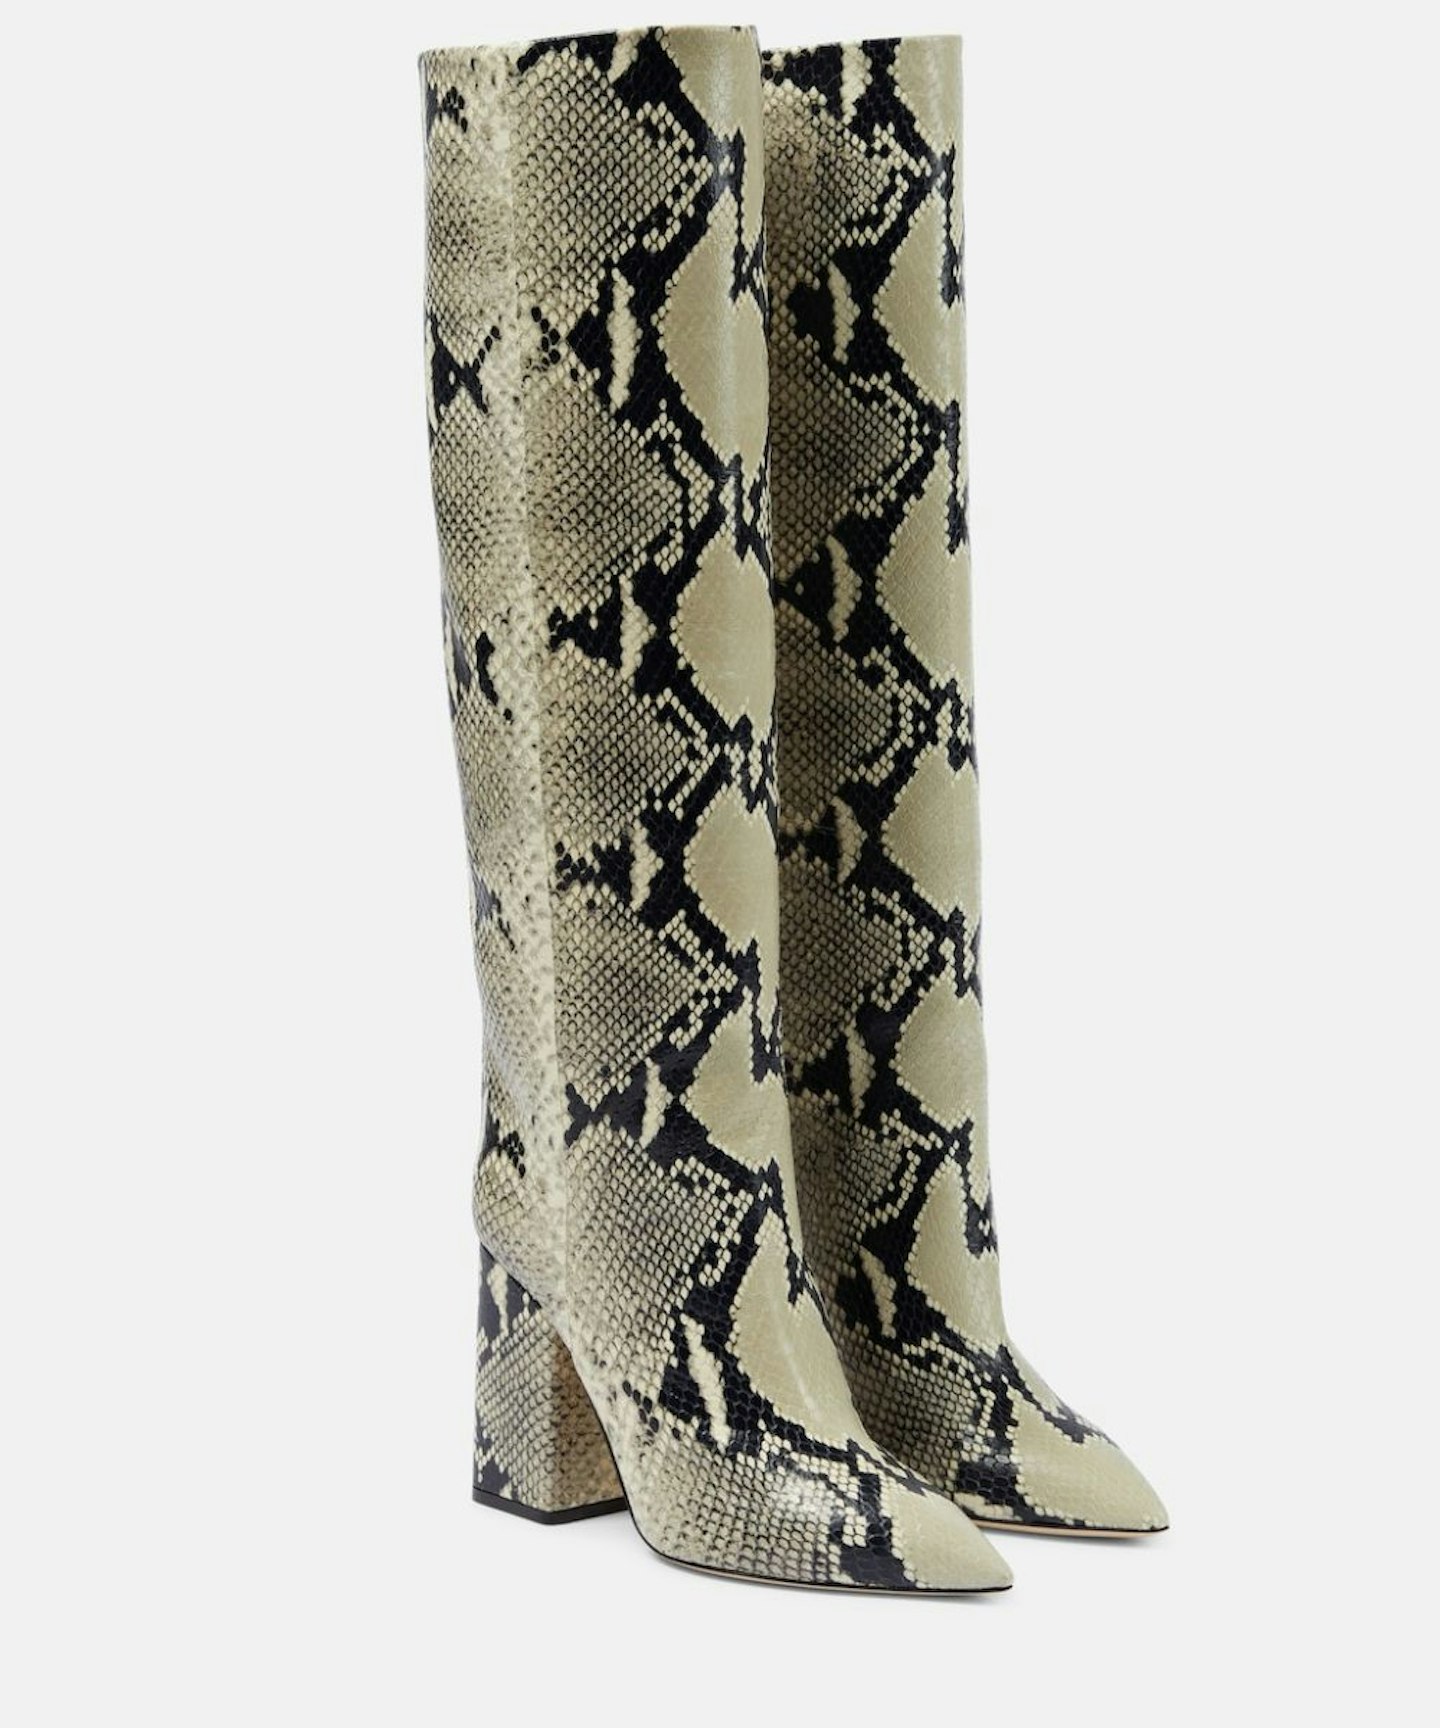 Anja Snake-Print Leather Knee-High Boots, Paris Texas